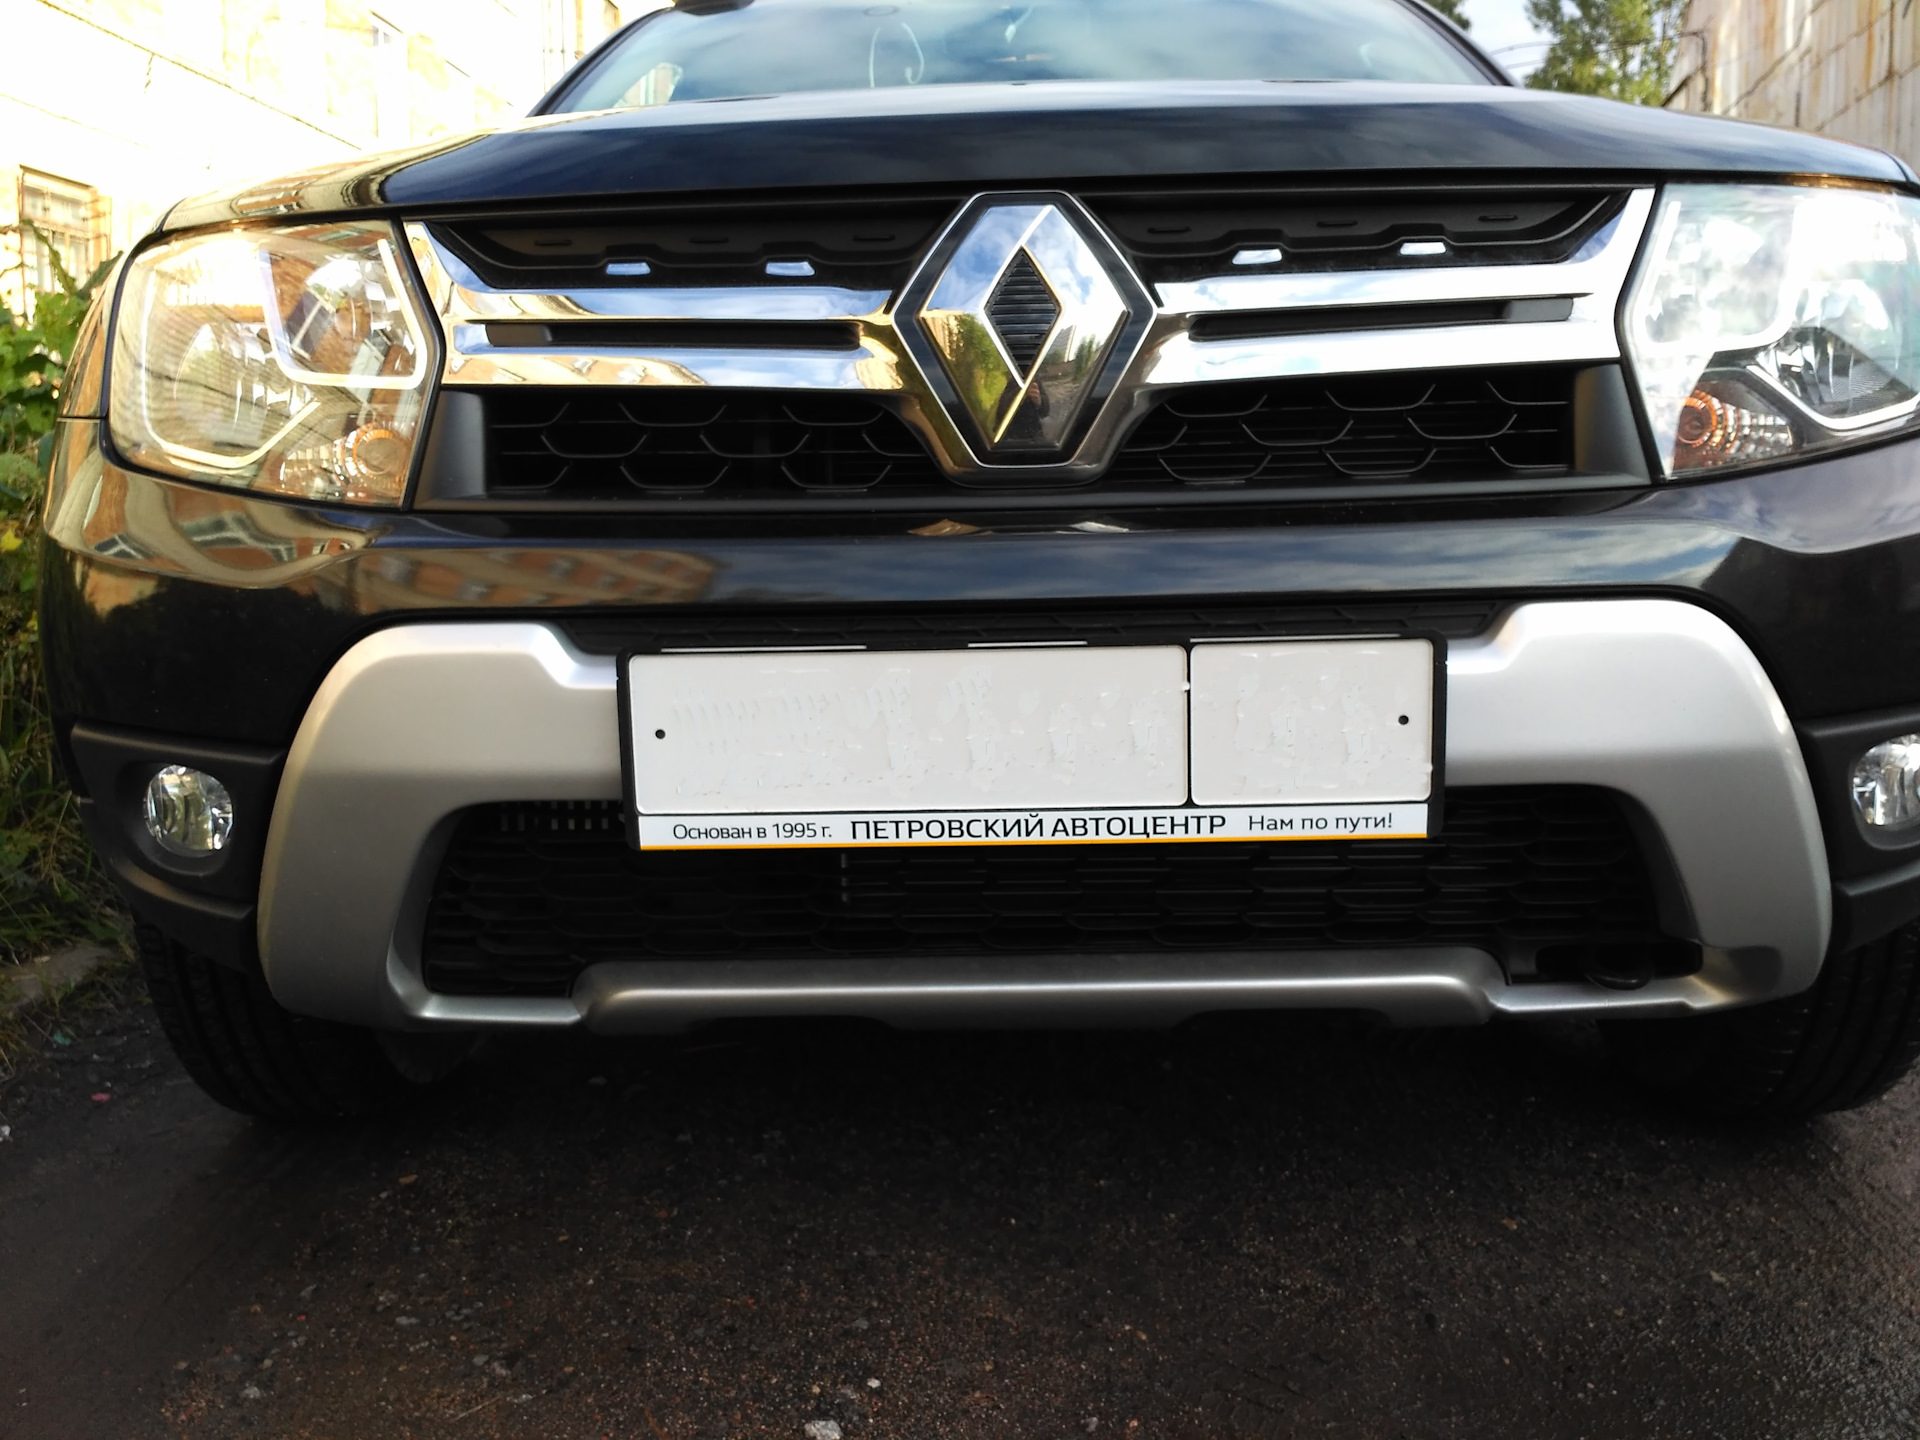 Решетка дастер купить. Renault Duster 2017 решетка радиатора. Решетка радиатора Дастер 2. Решетка Renault Duster 2. Renault Duster 1 решетка радиатора.